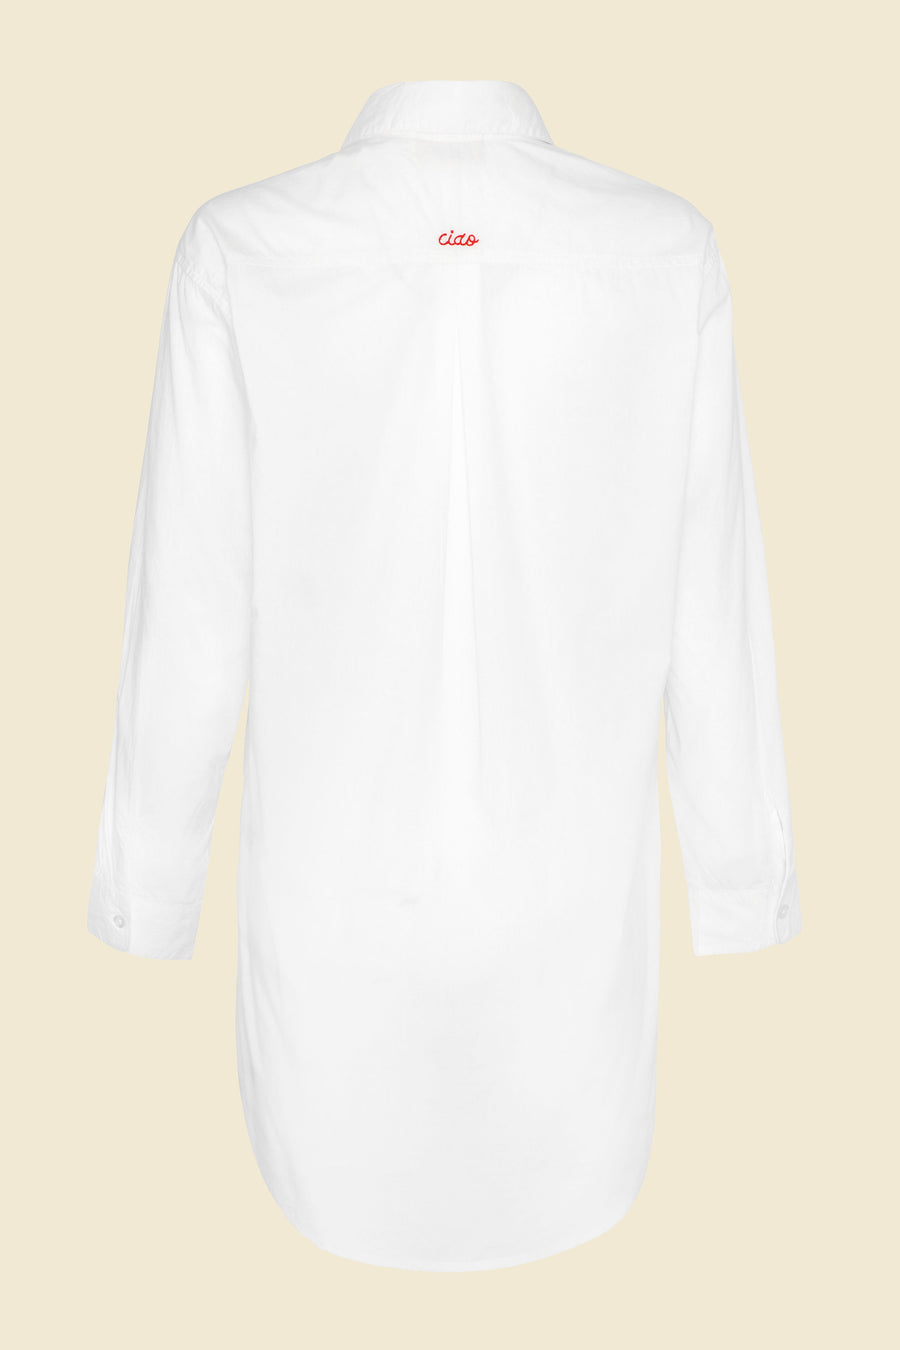 Ciao Shirt Dress - White